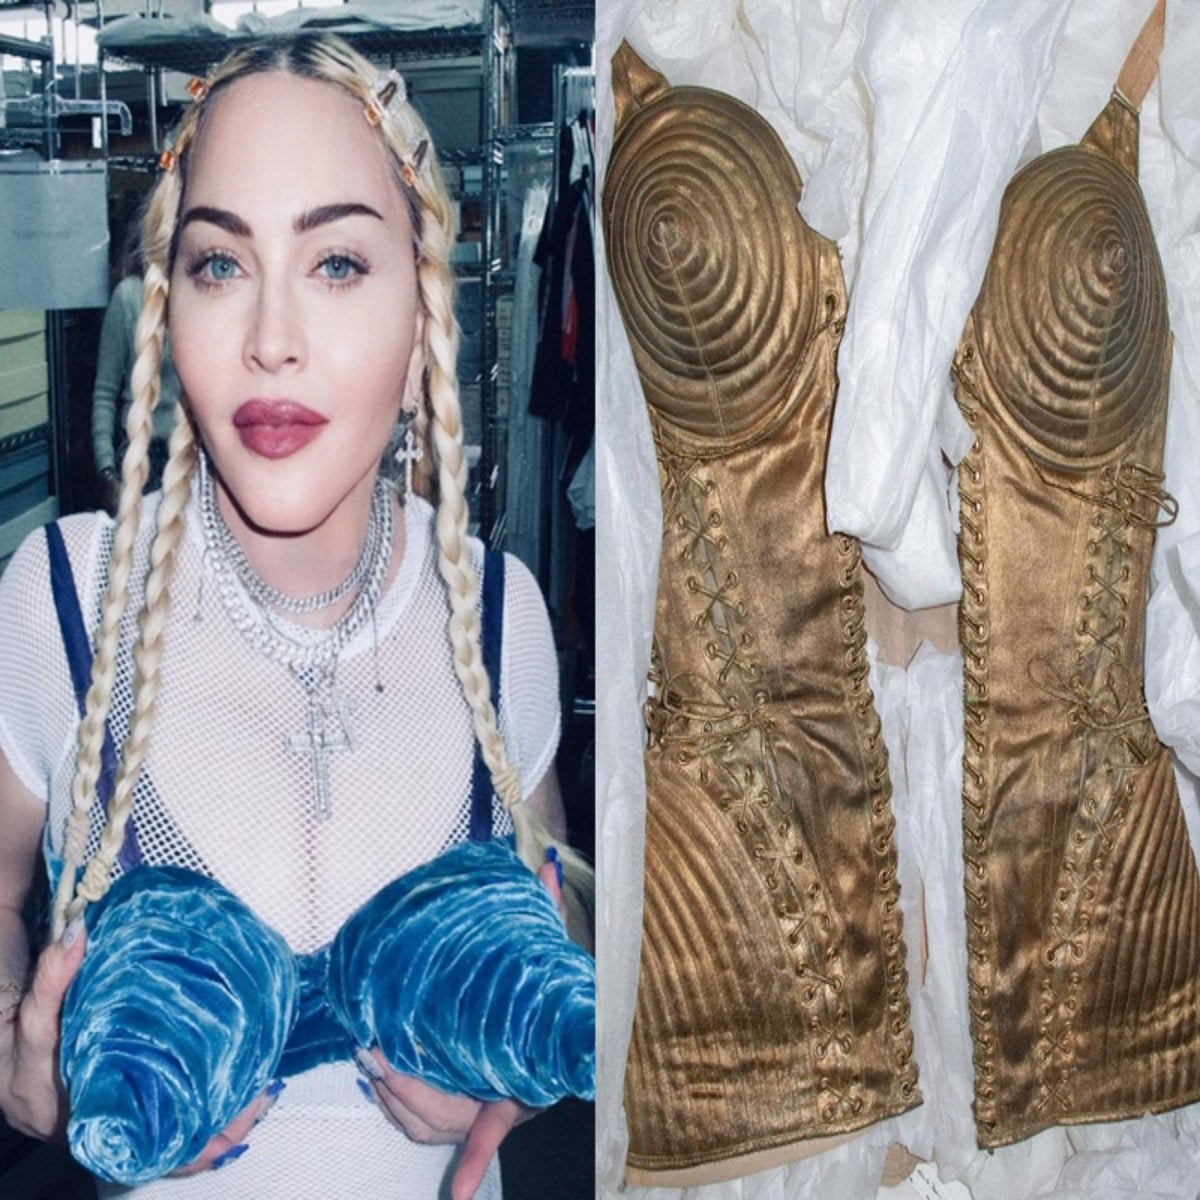 Madonna's famous cone bra makes a comeback at Paris Fashion Week